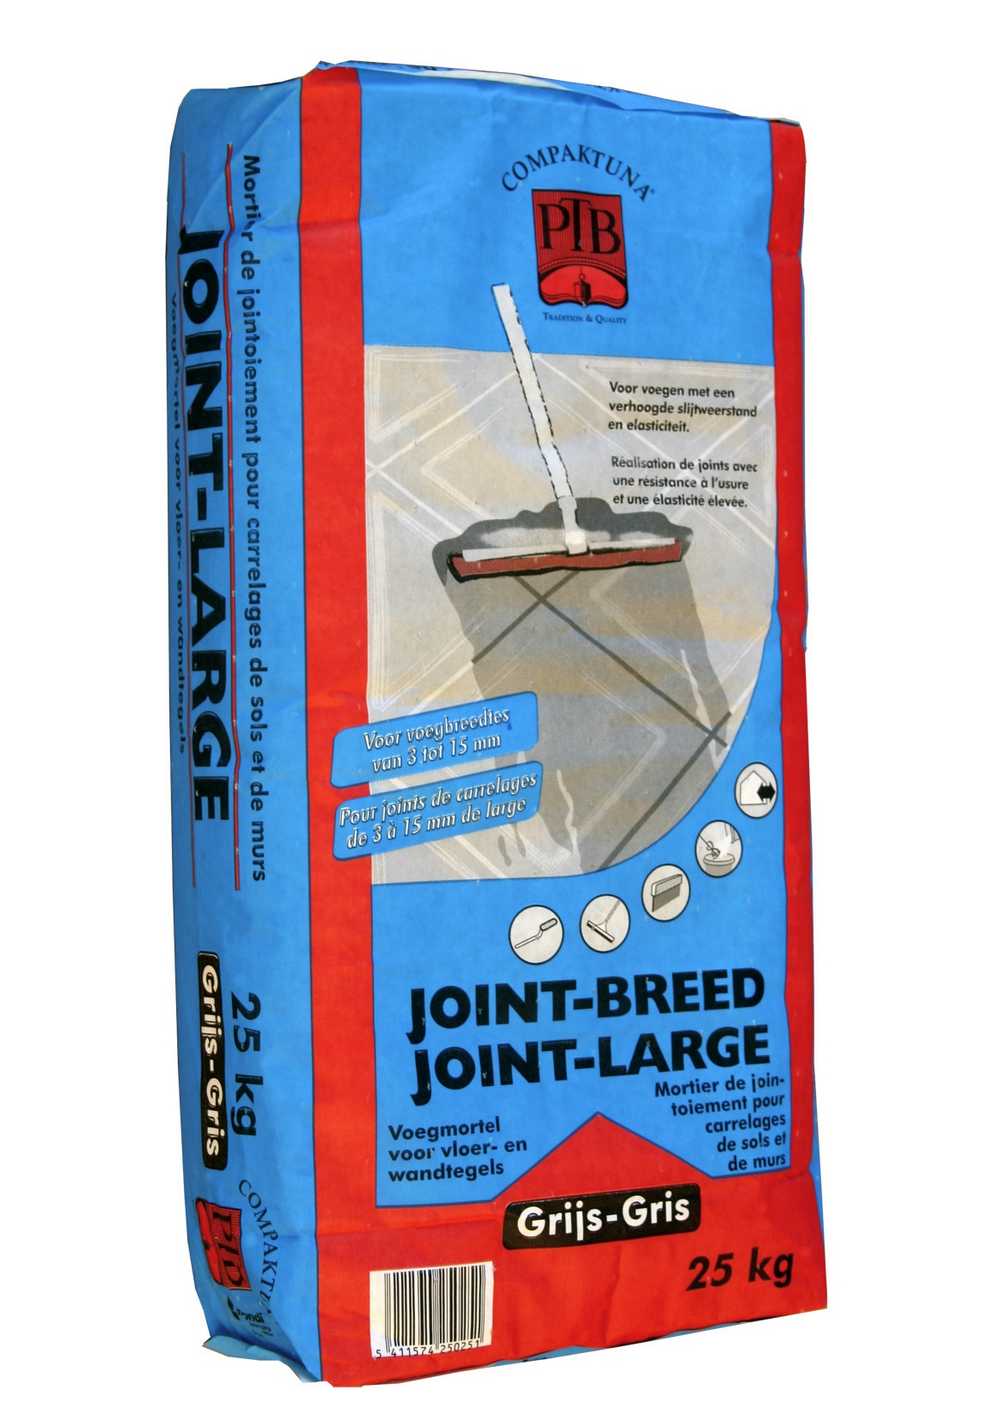 P.t.b.-joint-breed - 25kg - Grijs